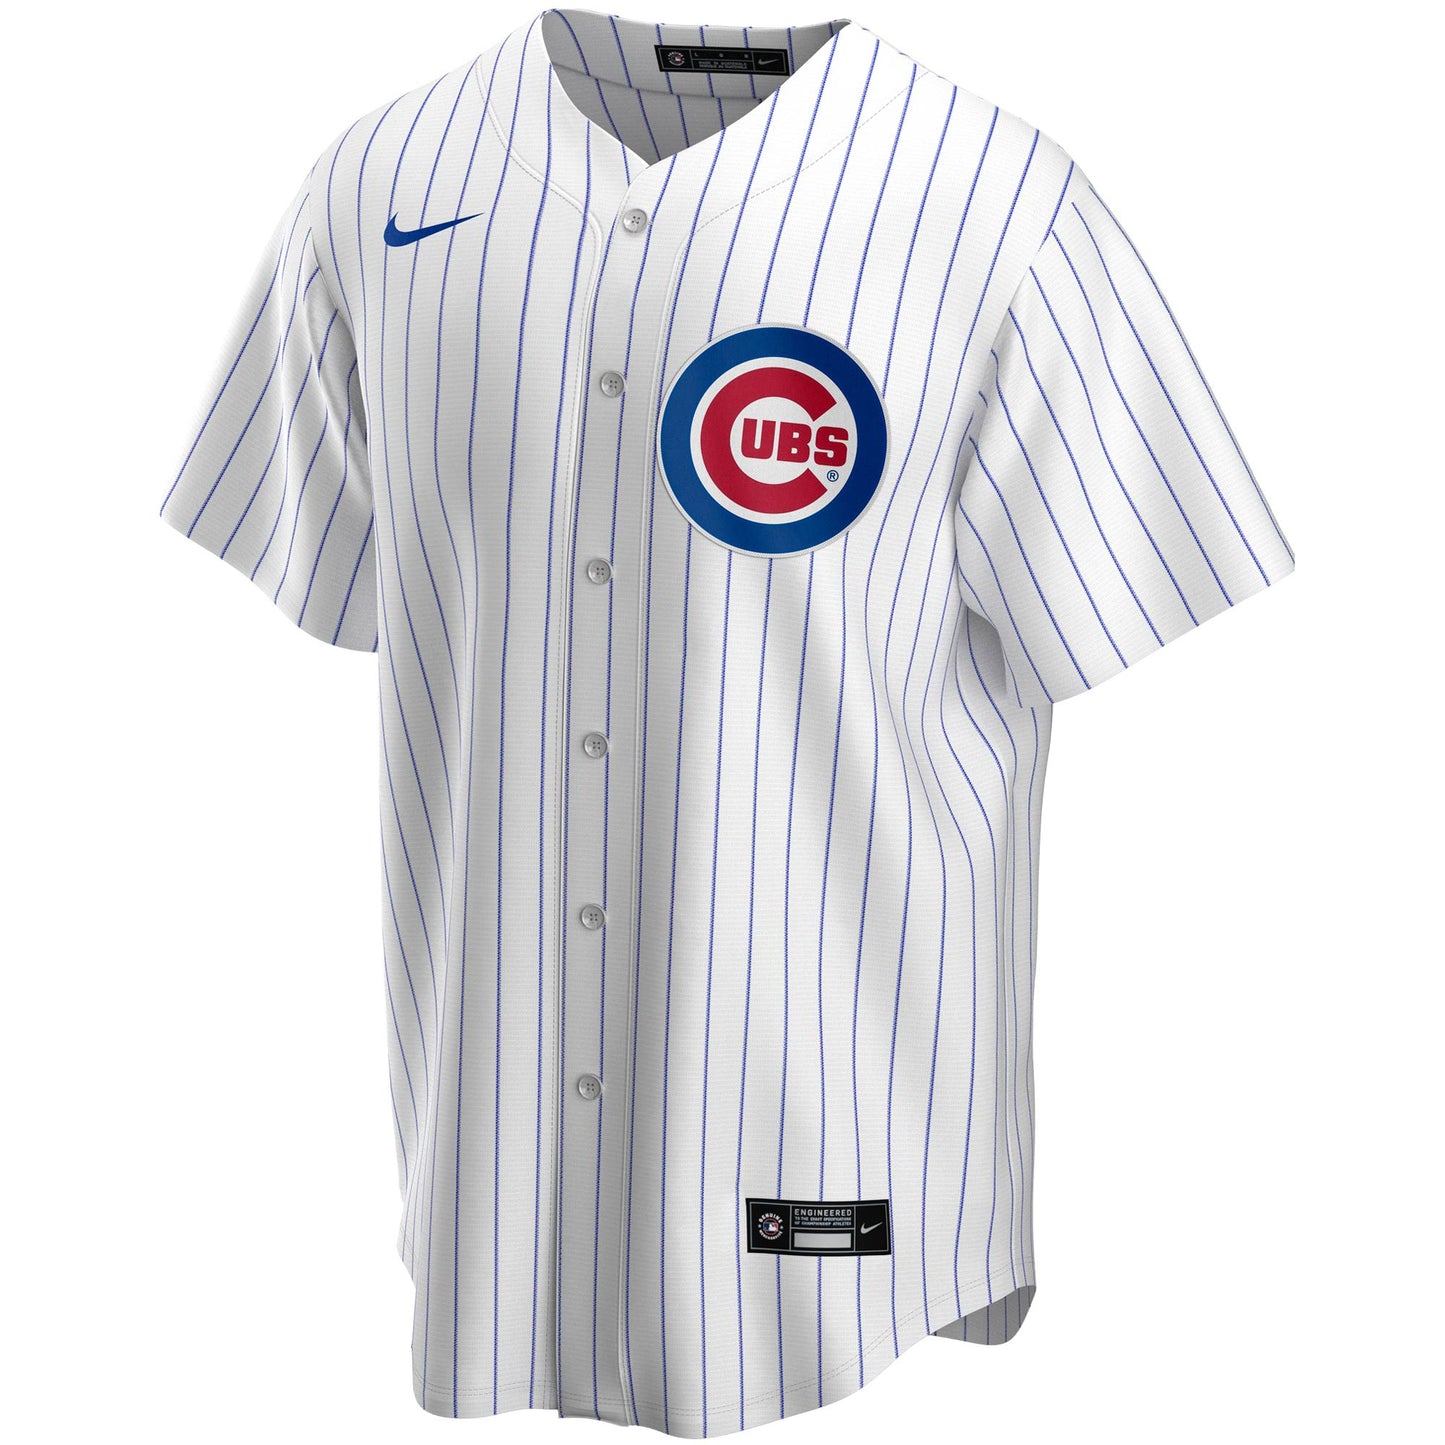 Cody Bellinger Chicago Cubs Home Pinstripe Men's Replica Jersey